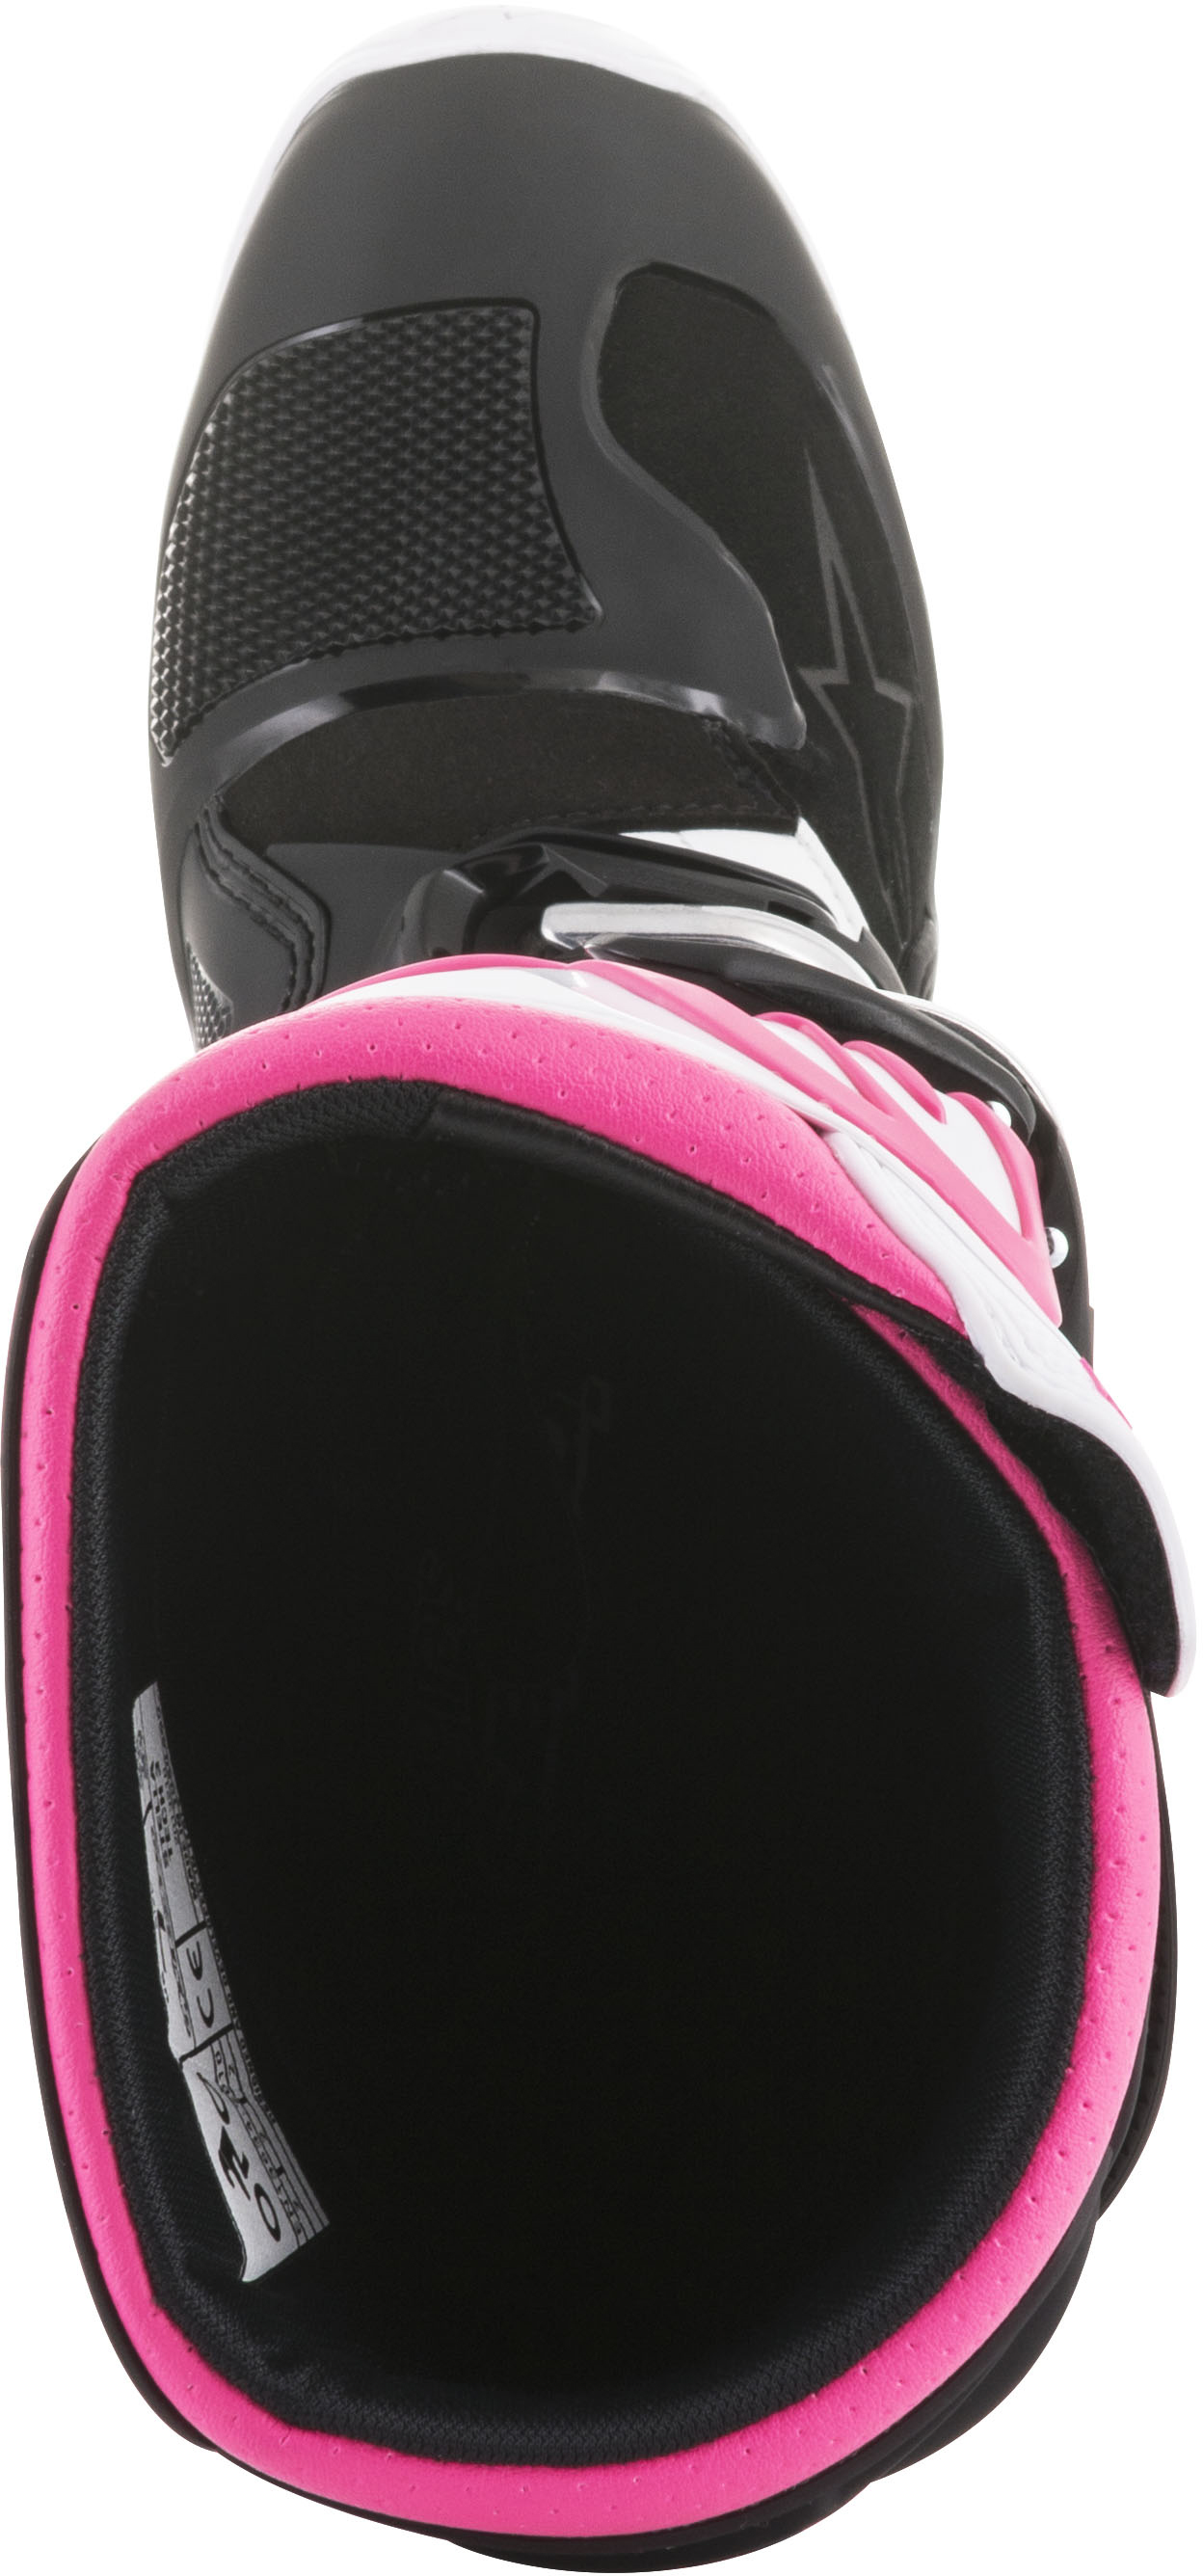 Tech 3 Stella Boots Black/White/Pink Size 8 - Click Image to Close